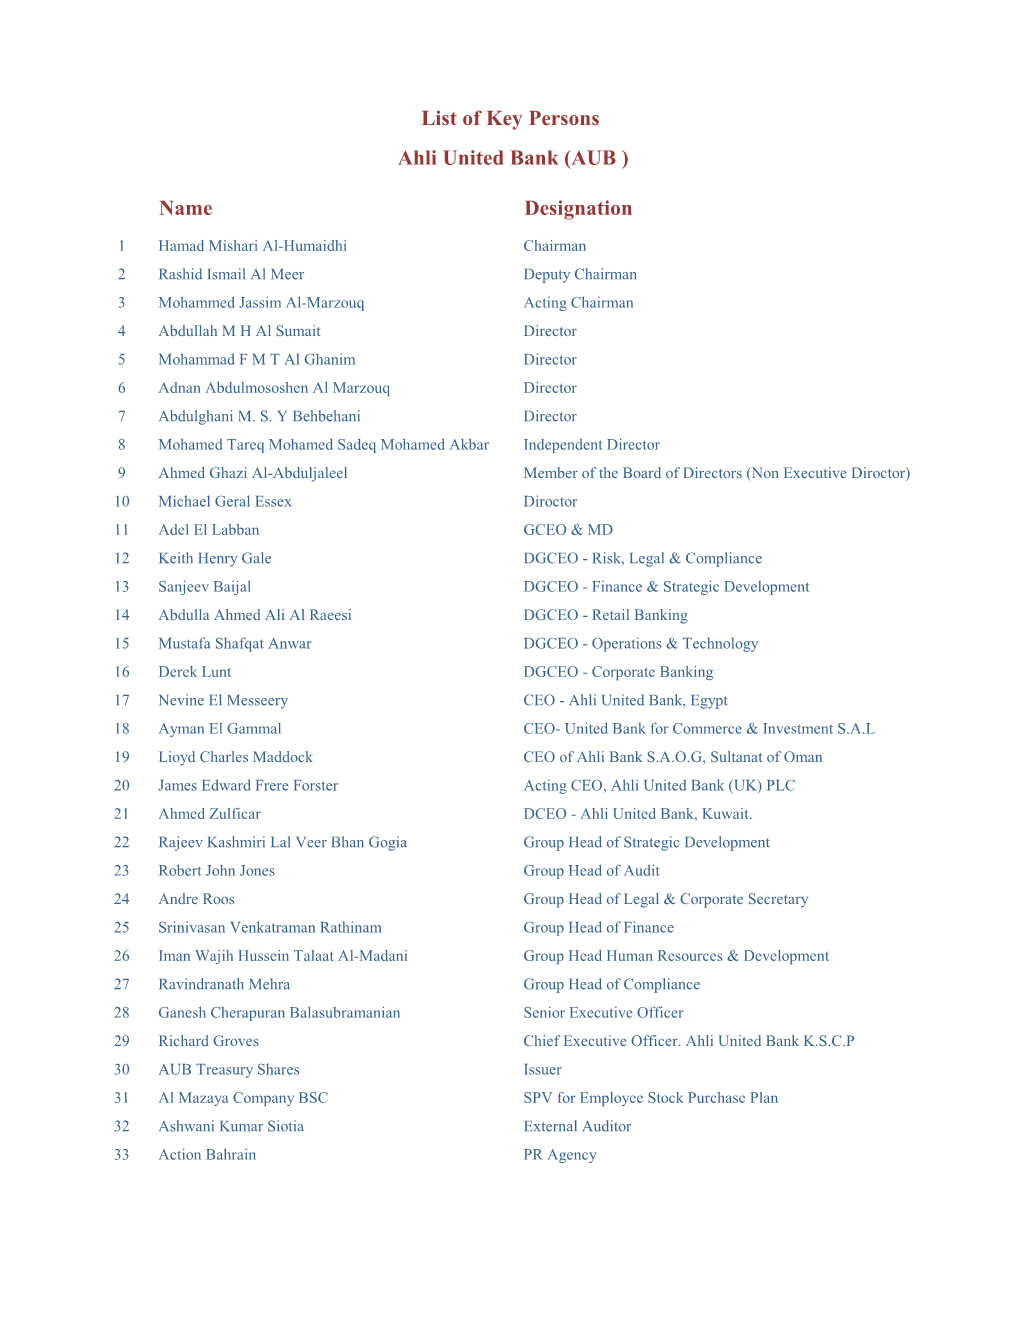 Name Designation List of Key Persons Ahli United Bank (AUB )